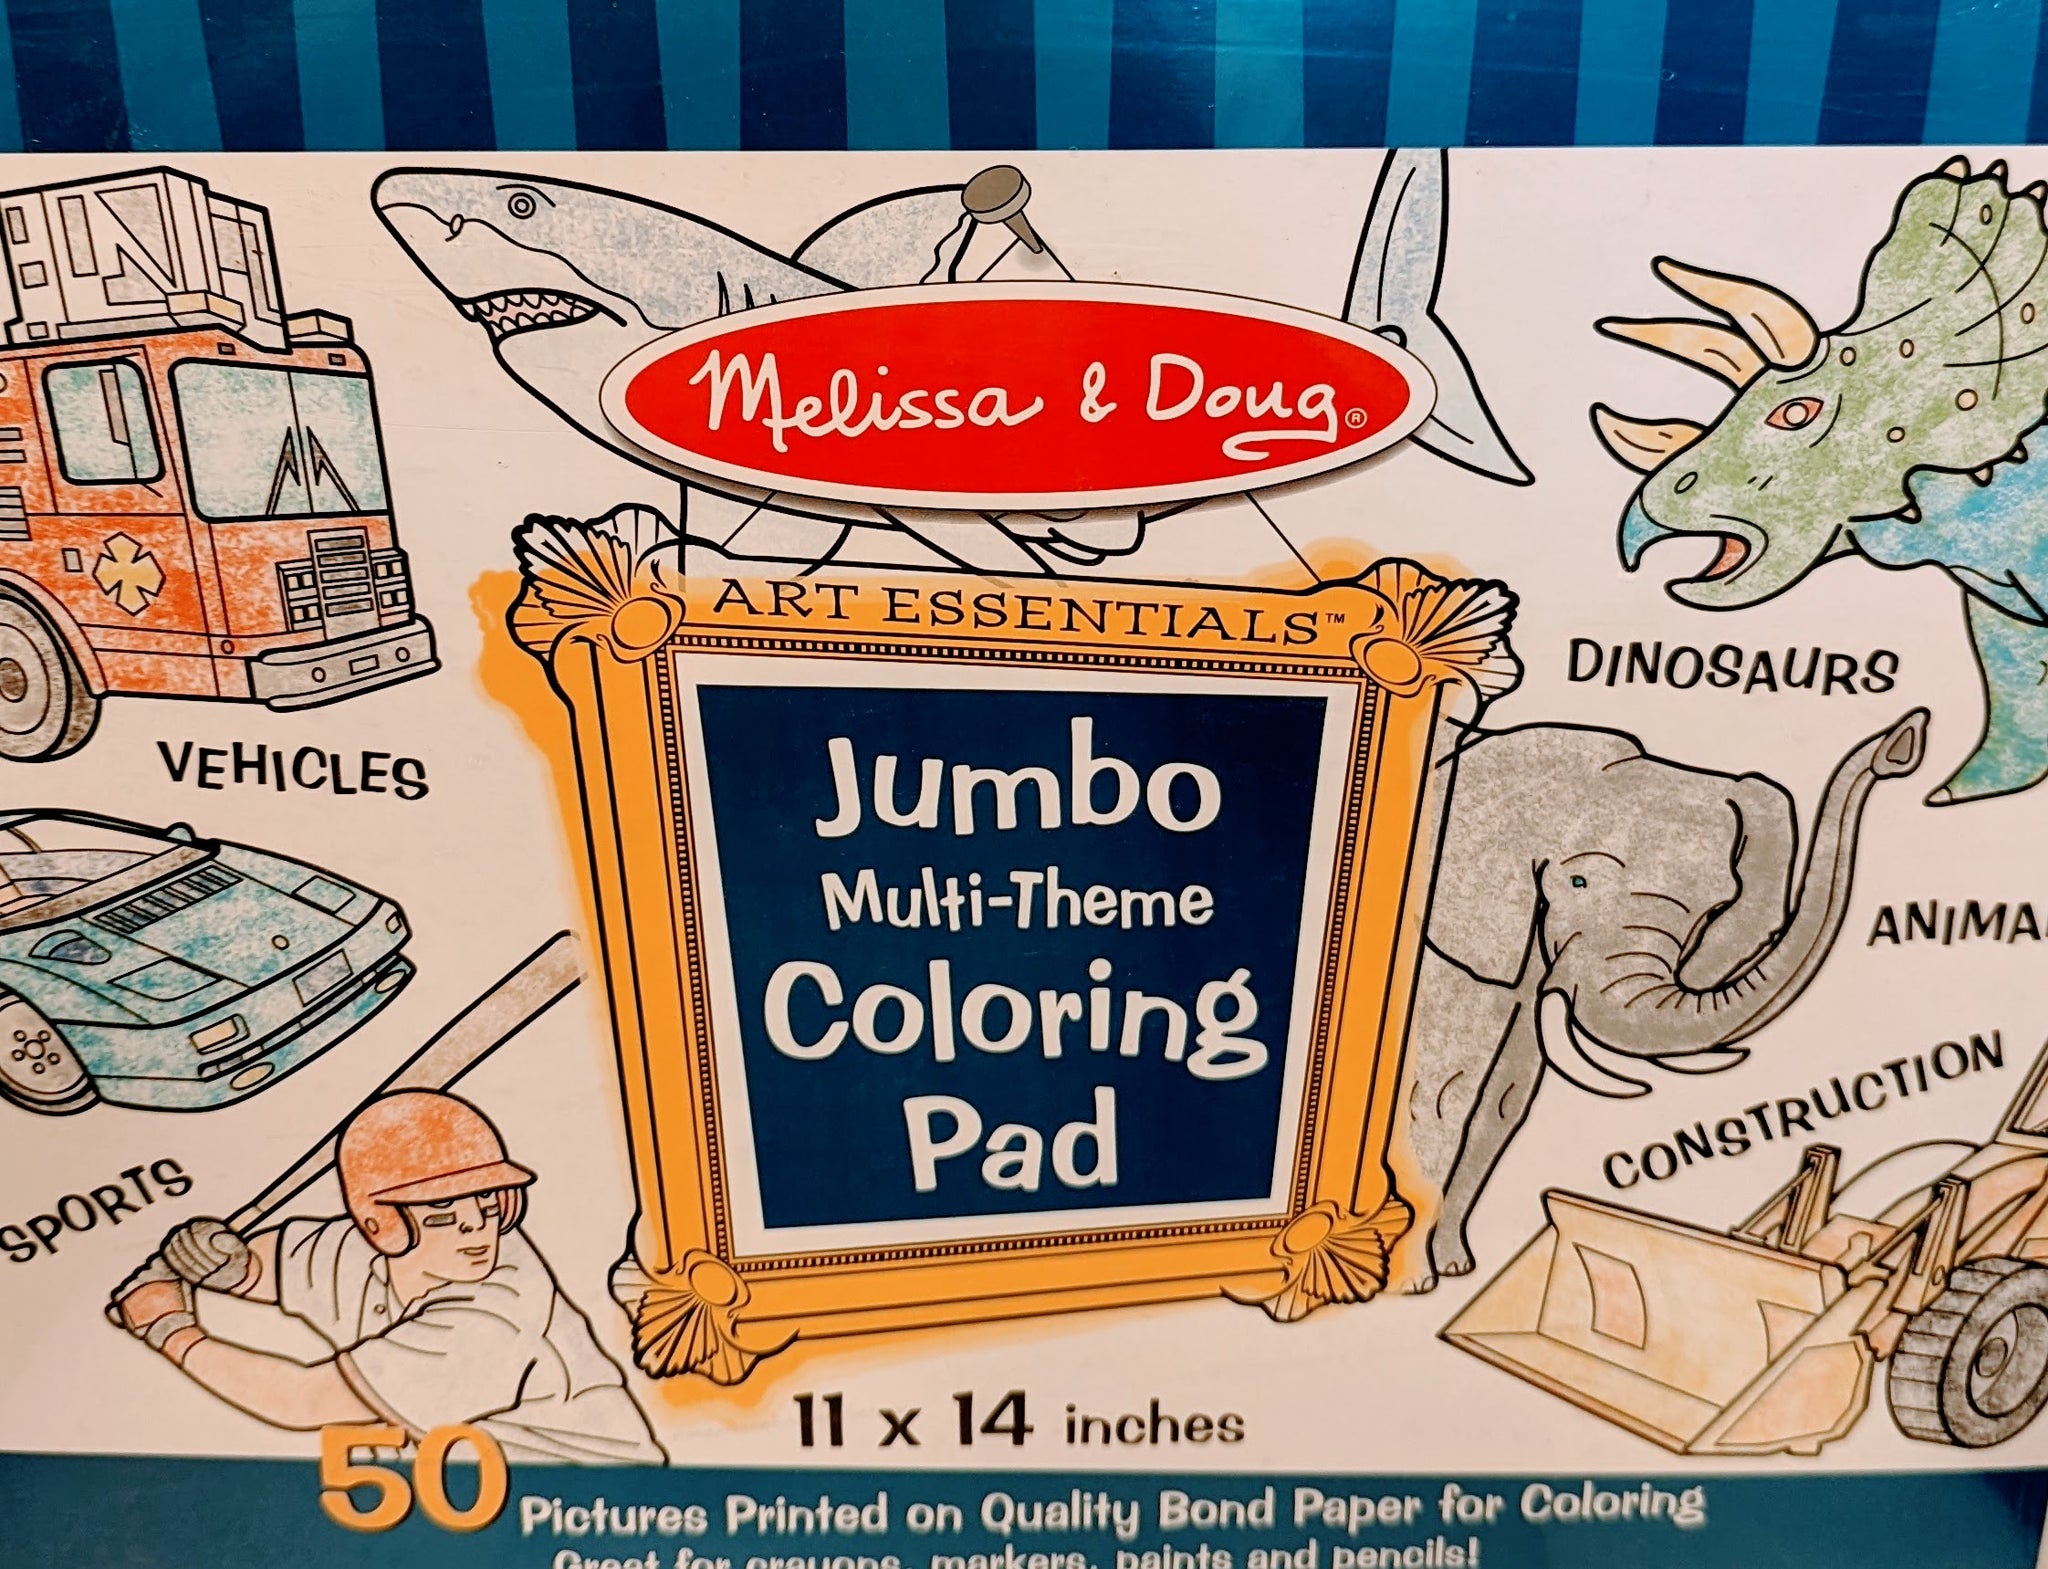 Jumbo Coloring Pad - Vehicles